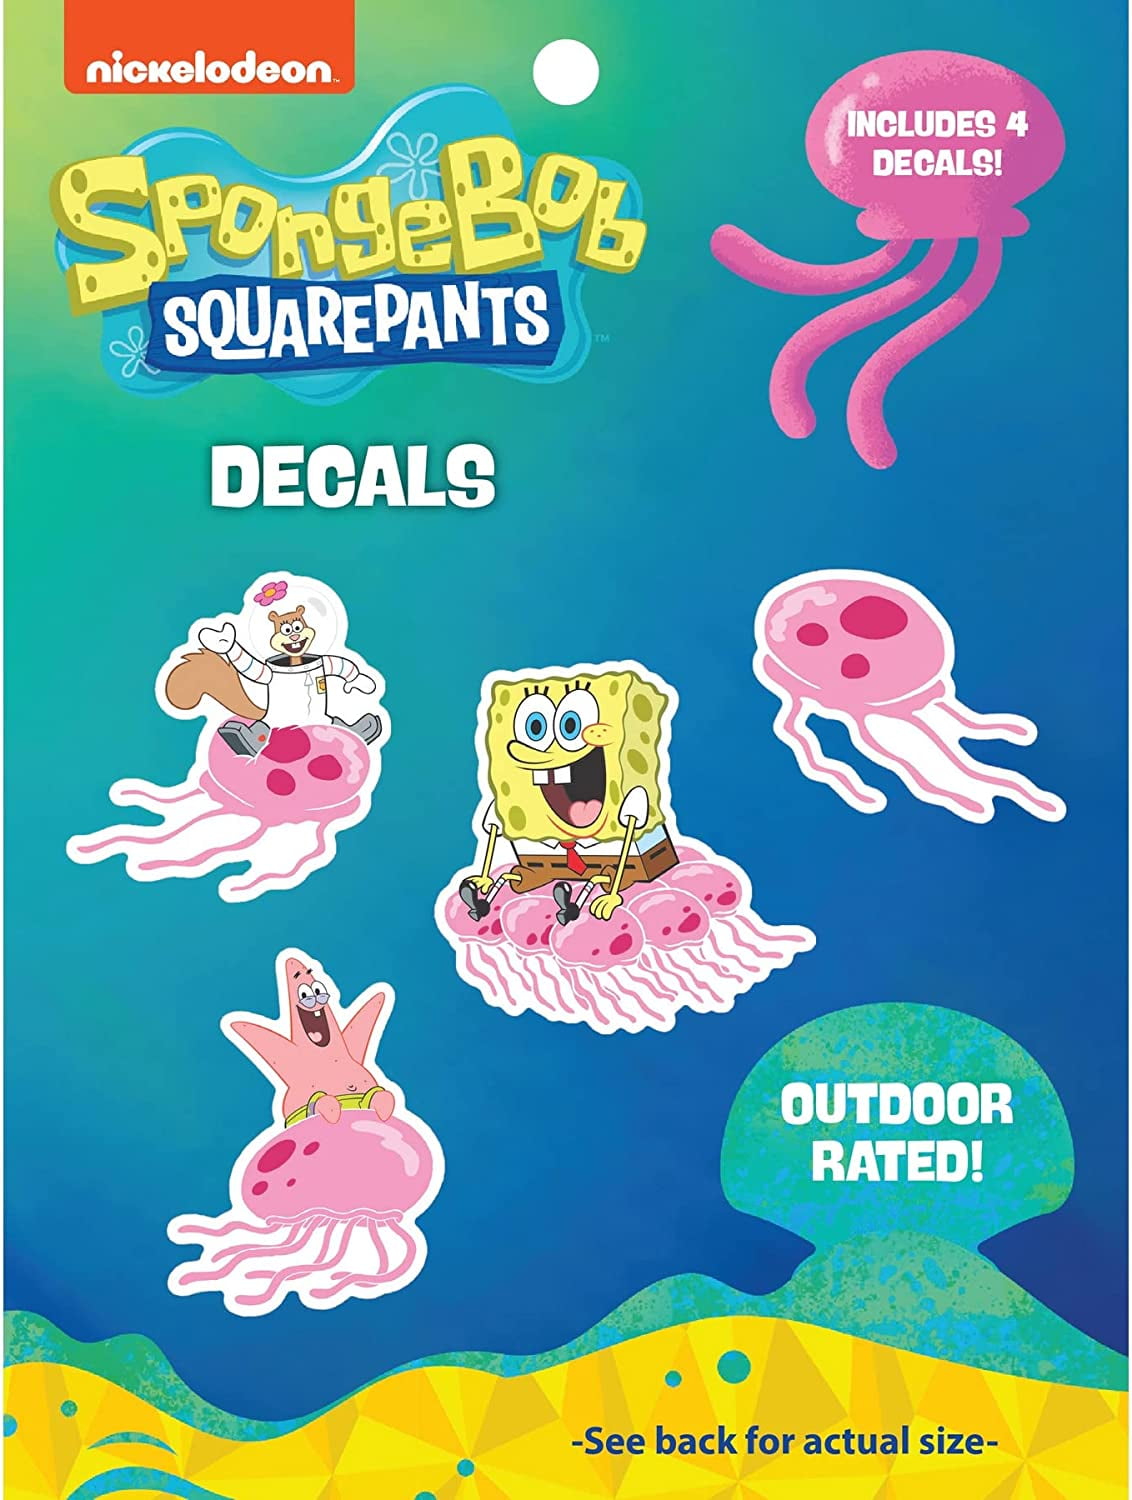 SpongeBob SquarePants Boys No Show Socks, 16-Pack, Sizes S-L